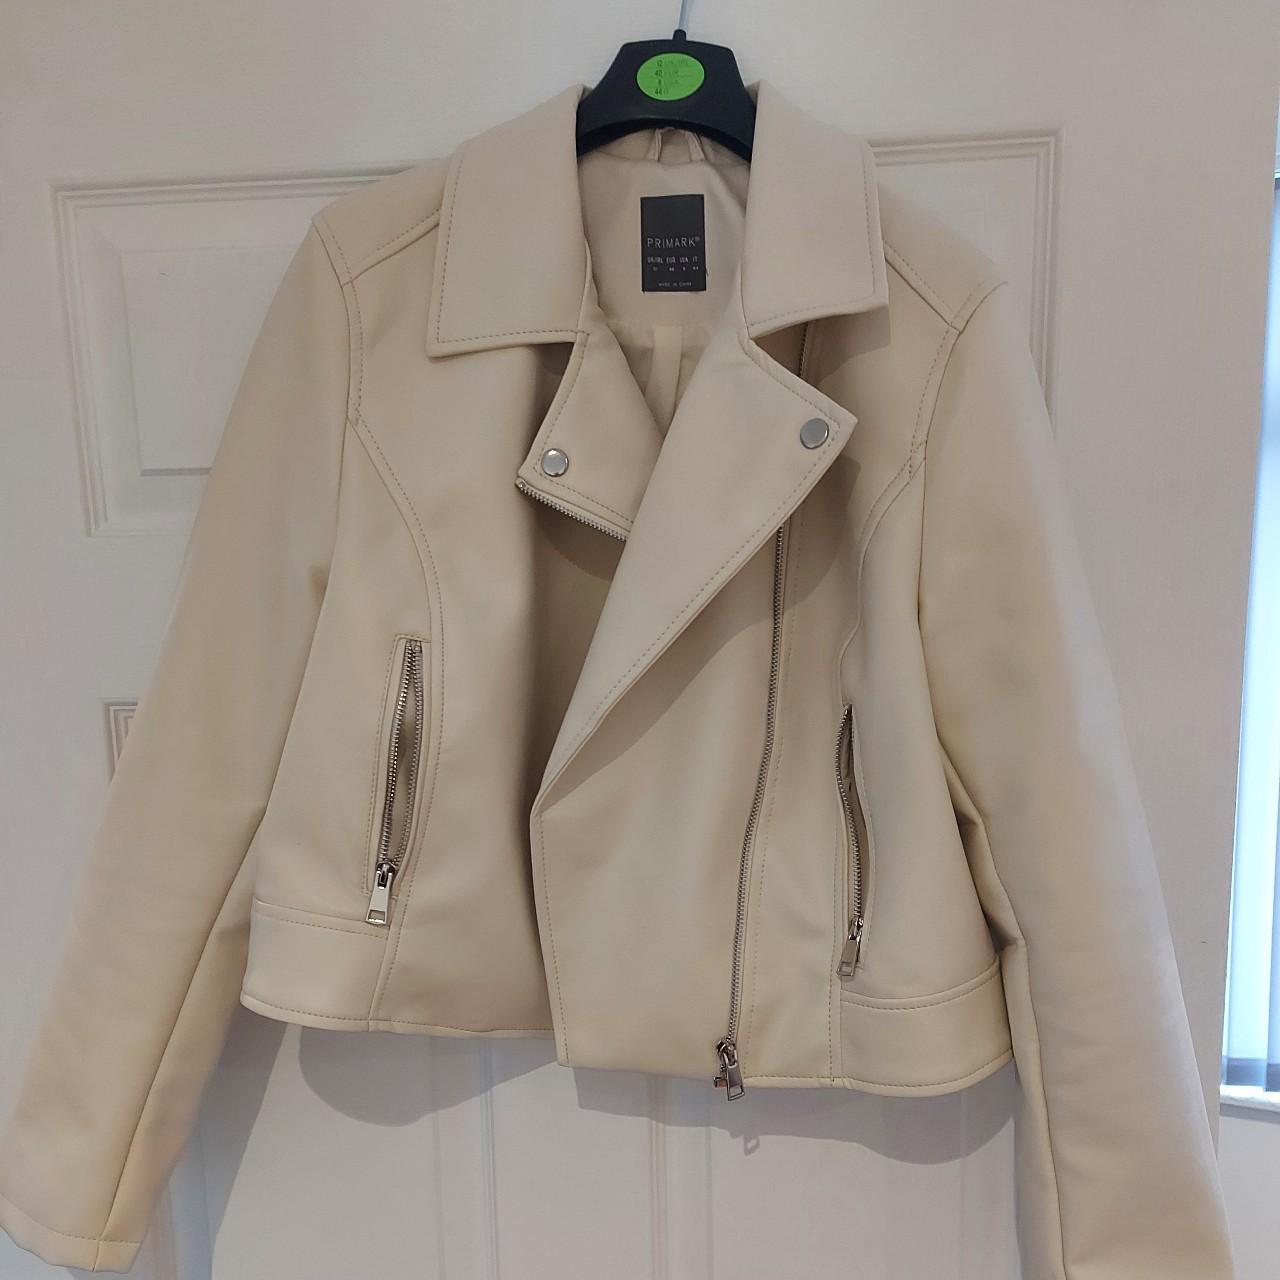 Primark white/cream faux leather jacket size 12,... - Depop